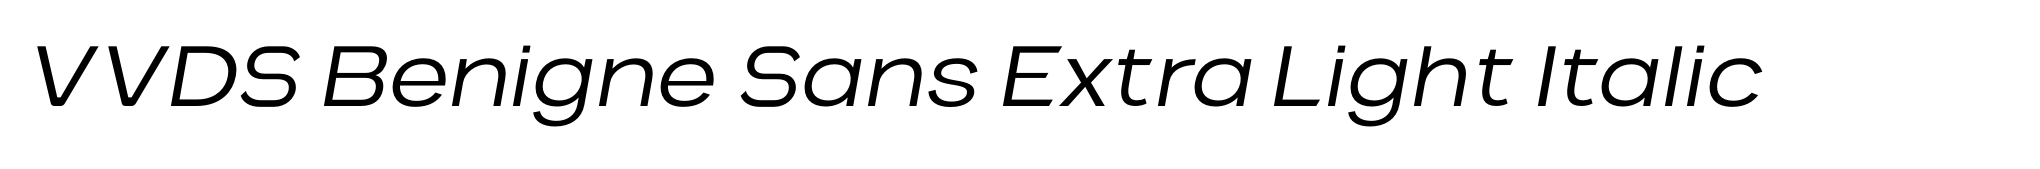 VVDS Benigne Sans Extra Light Italic image